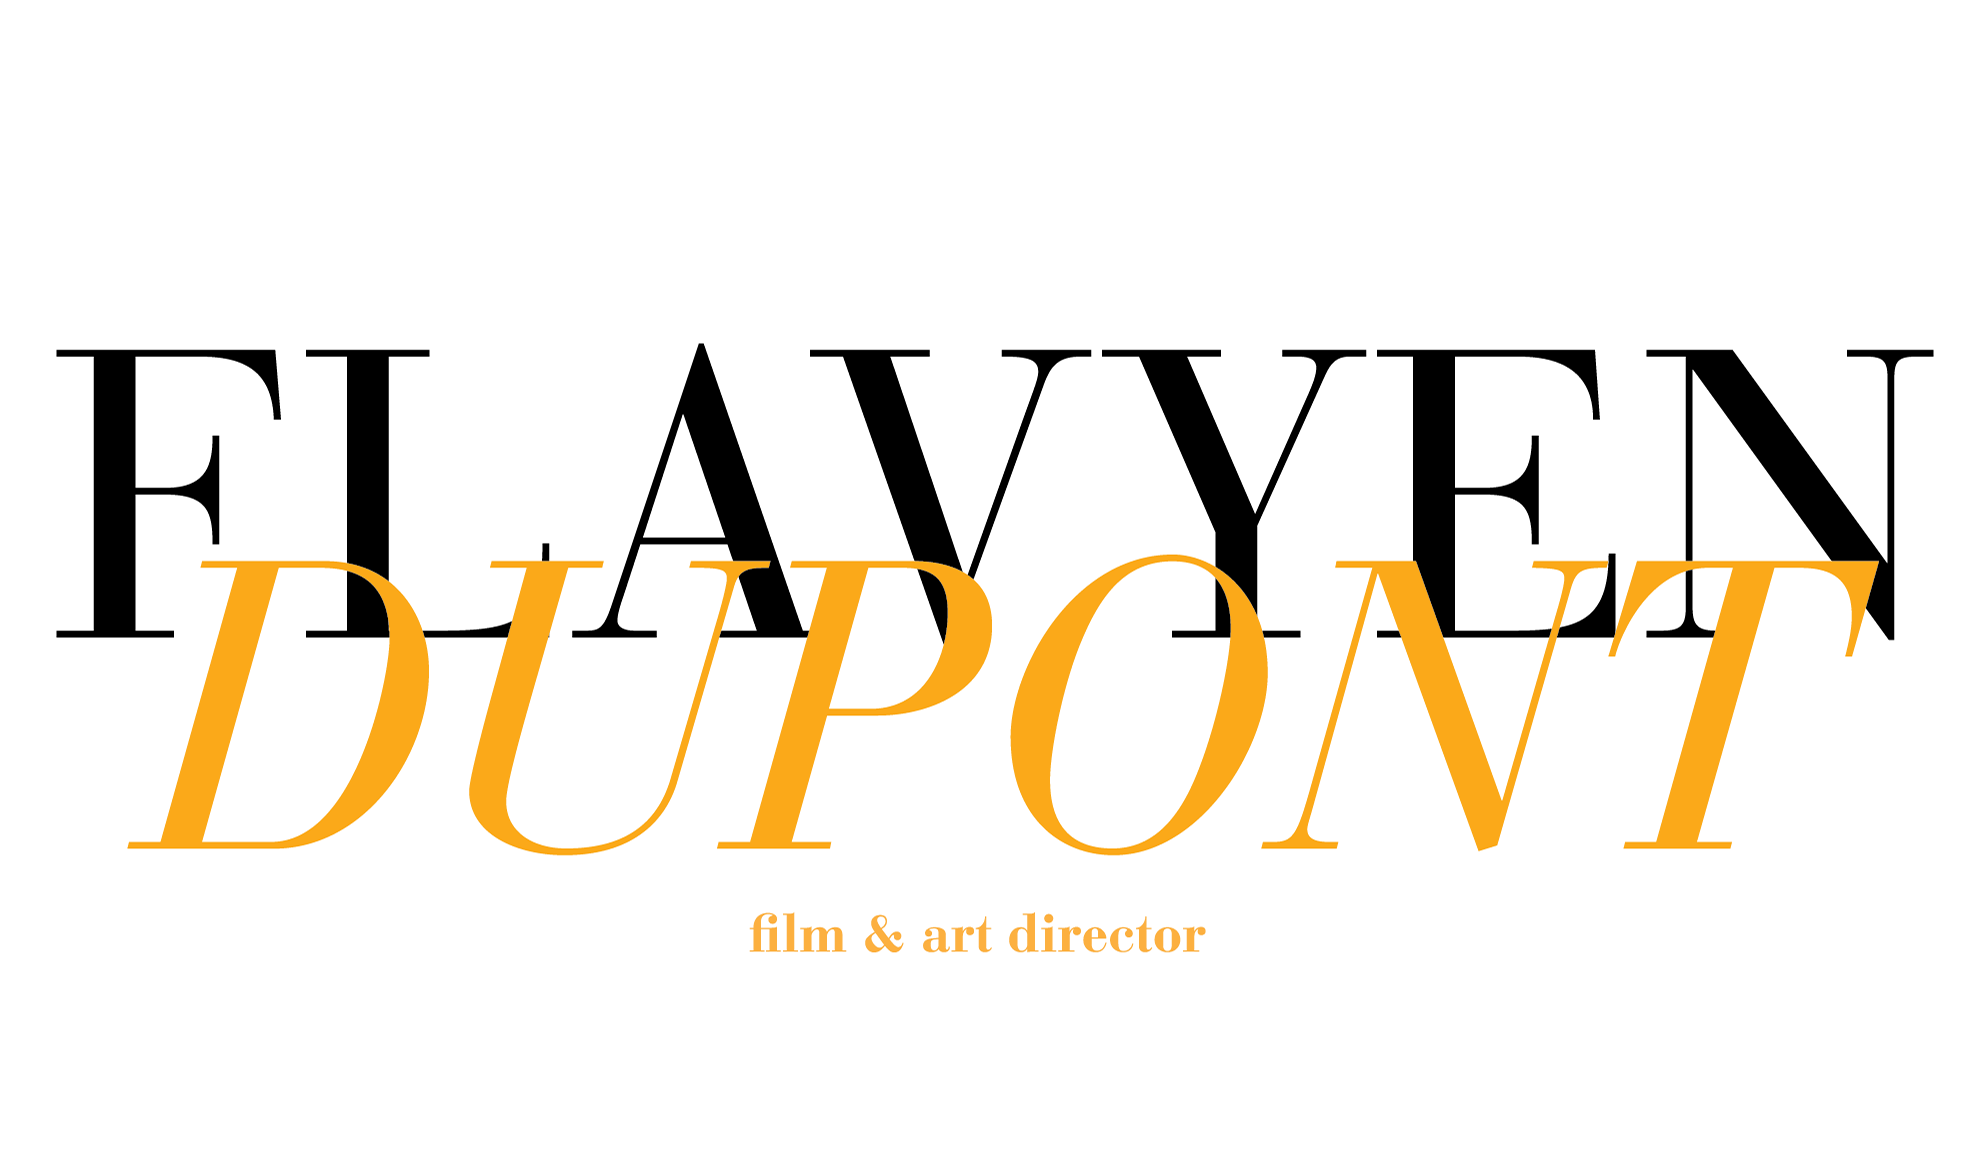 Flavyen Dupont